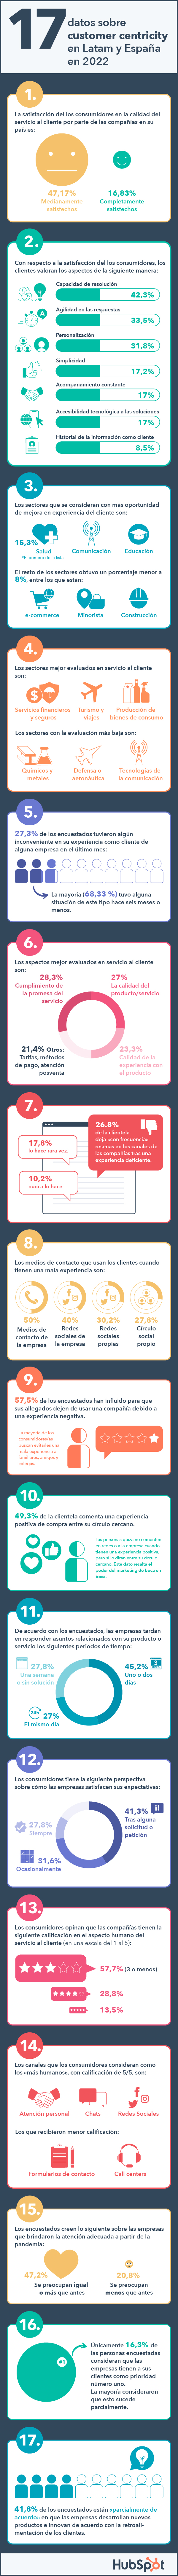 Estadísticas sobre customer centricity en Latinoamérica y España (datos de HubSpot)